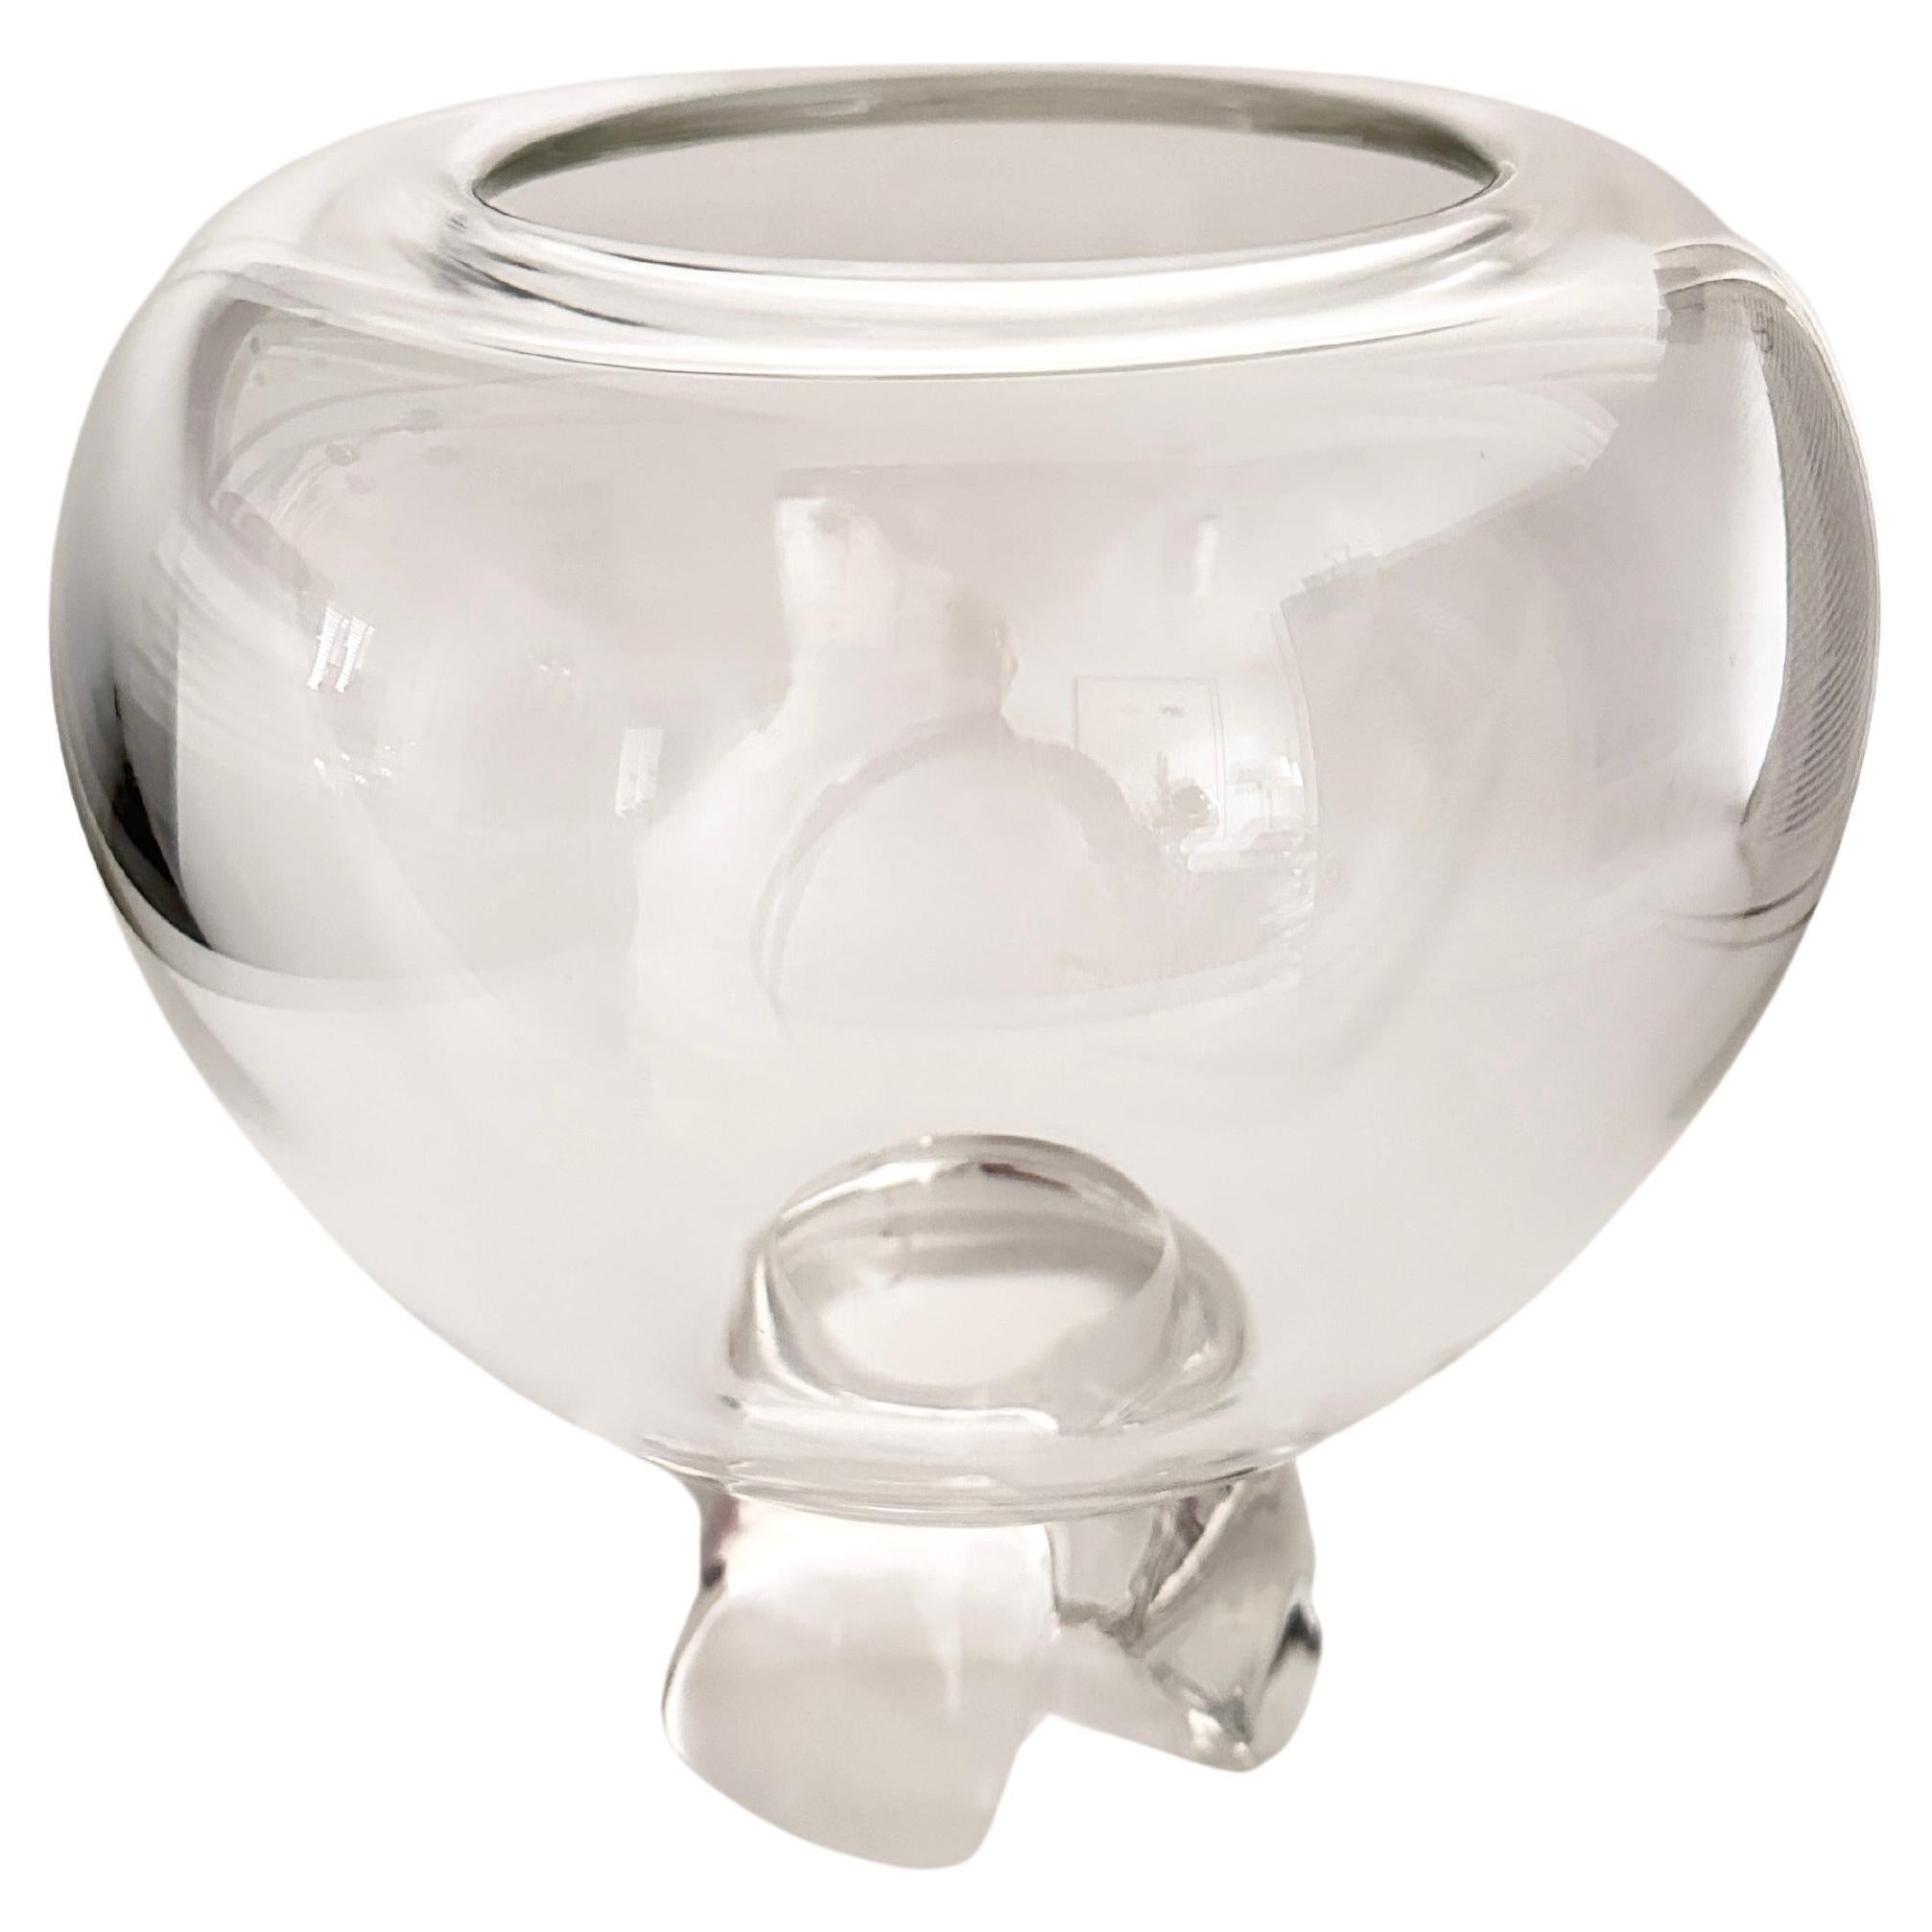 Crystel "Bone" Series Bowl Designed by Elsa Peretti for Tiffany & Company For Sale